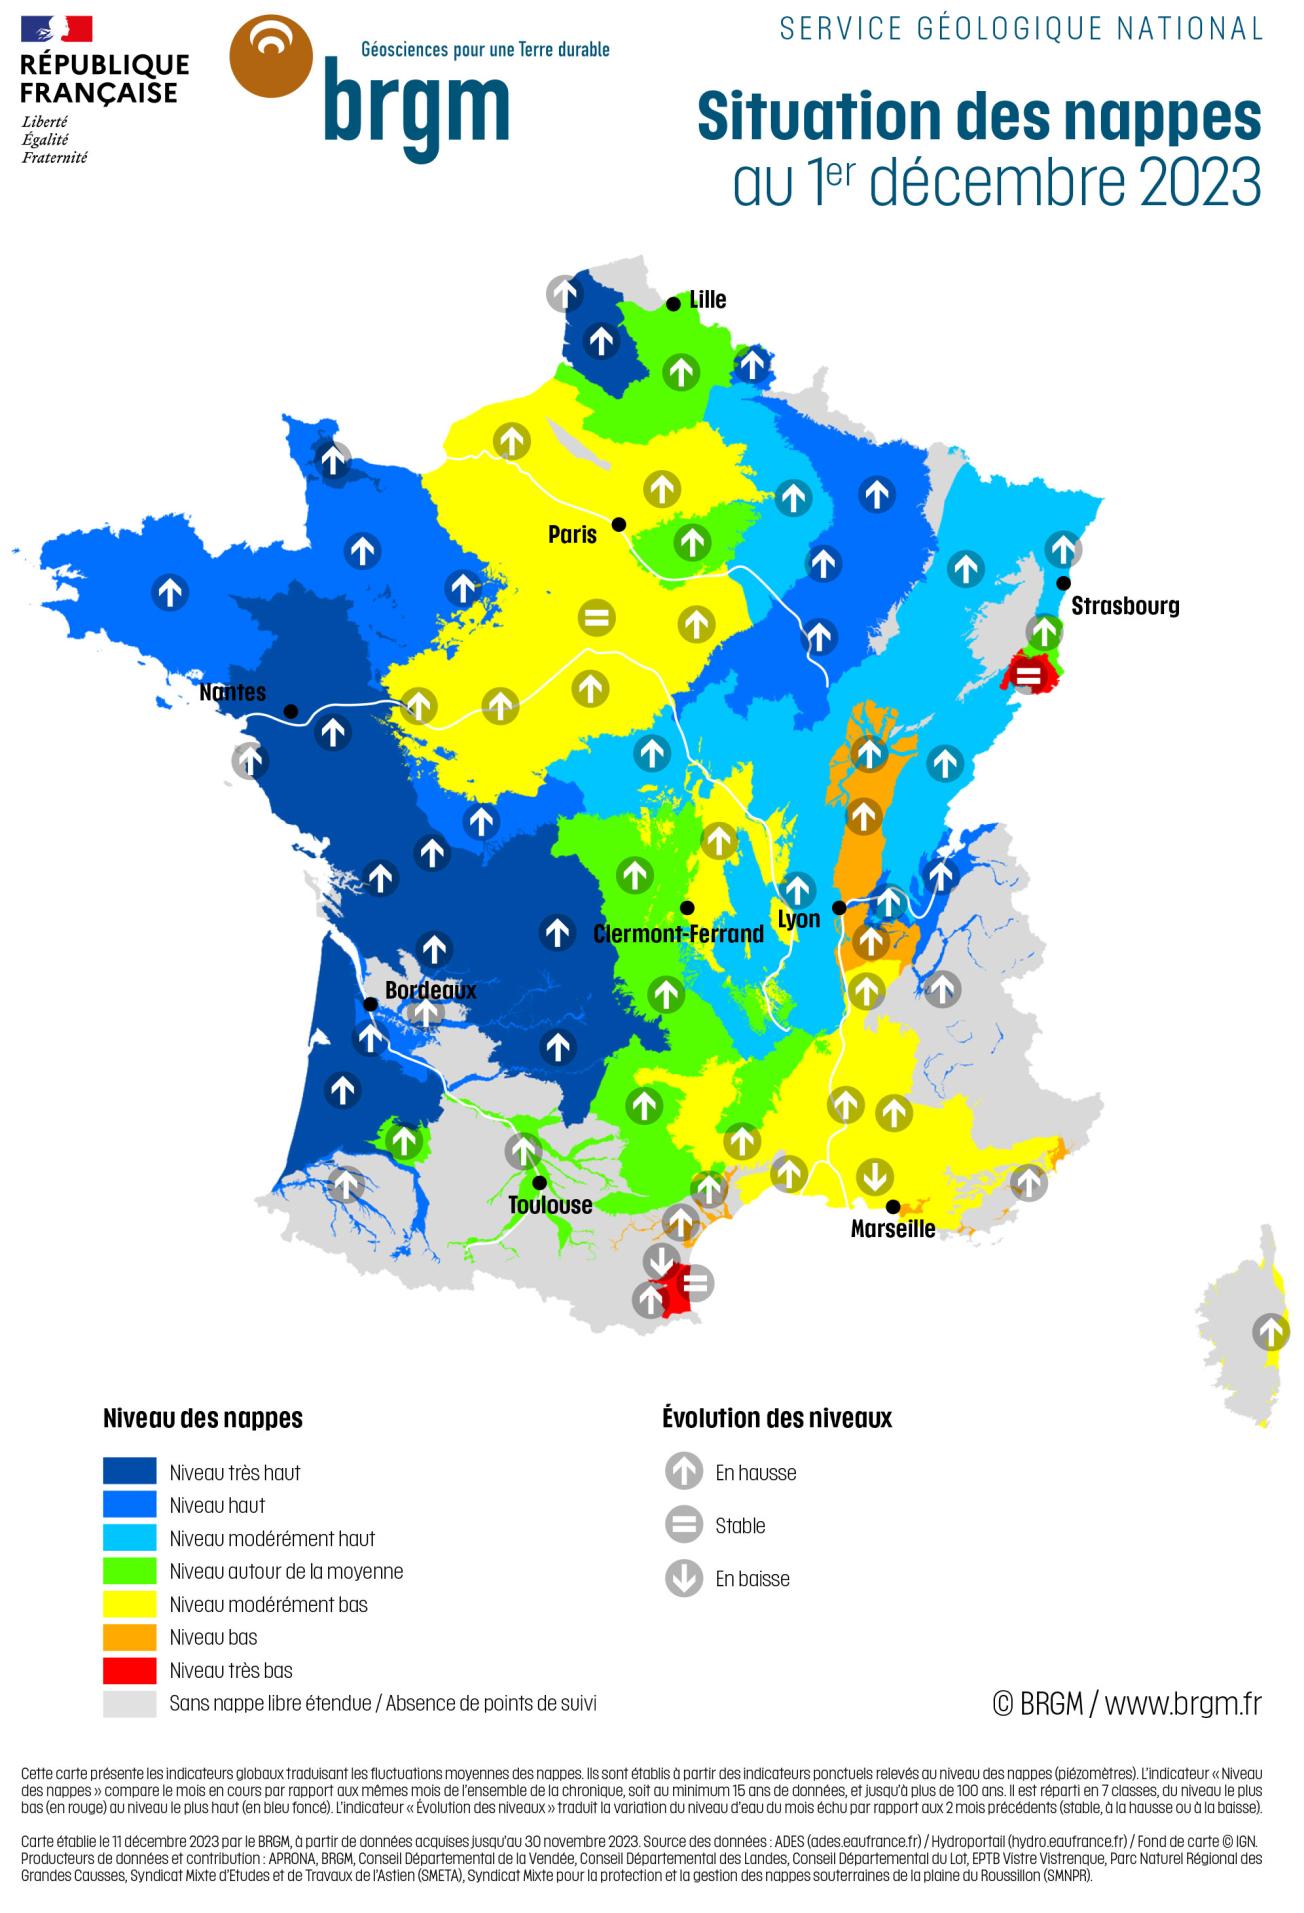 Map of aquifer levels in mainland France on 1 December 2023.